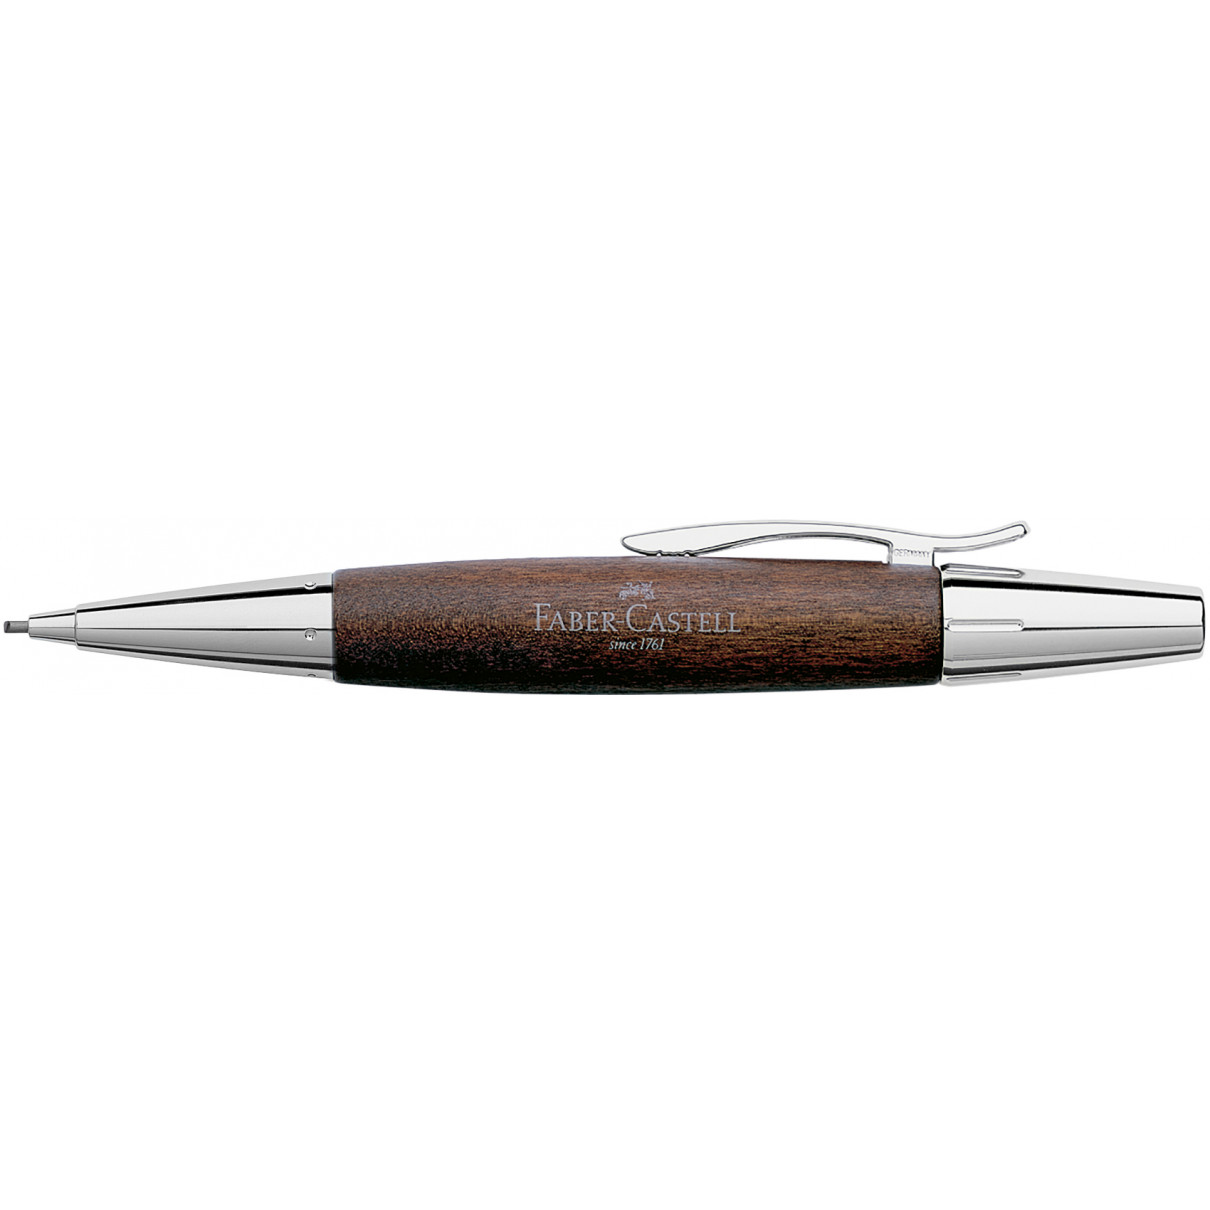 Faber-Castell e-motion Pencil - Dark Wood and Chrome